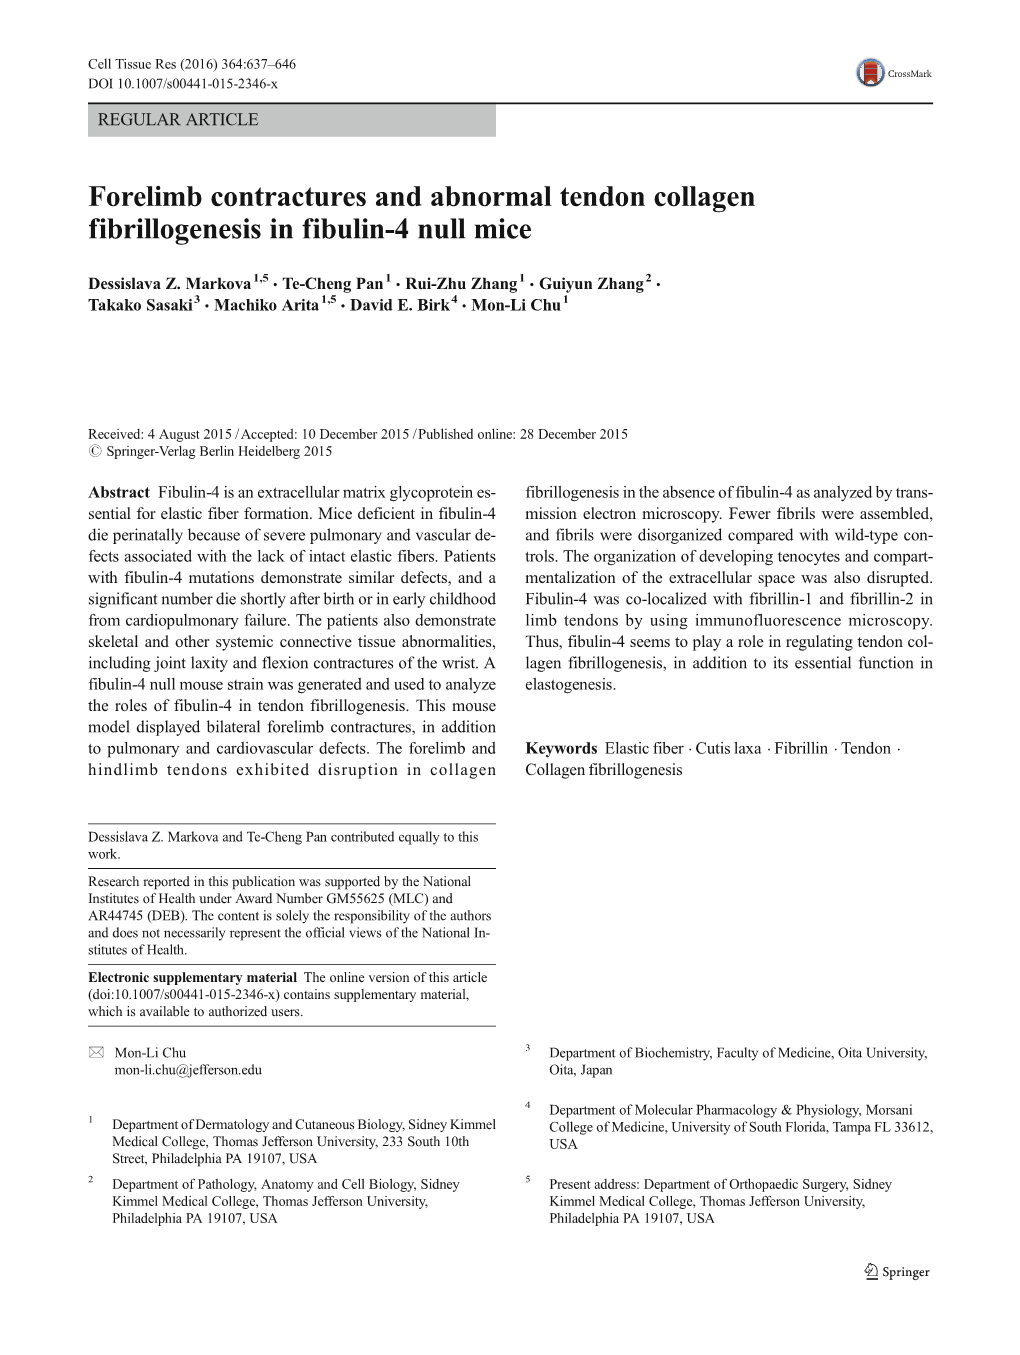 Forelimb Contractures and Abnormal Tendon Collagen Fibrillogenesis in Fibulin-4 Null Mice